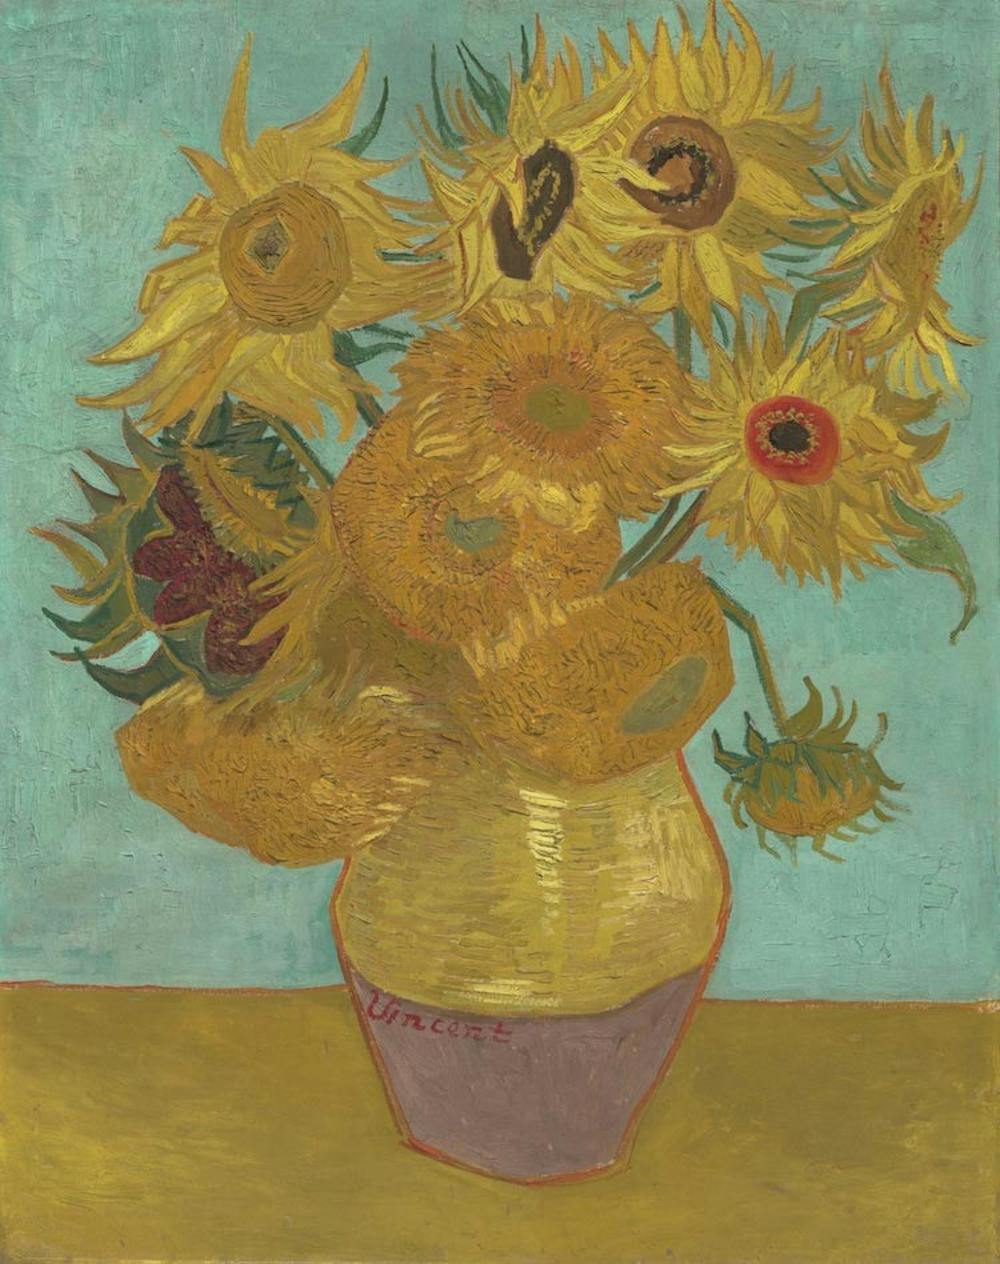 The Story of Van Gogh